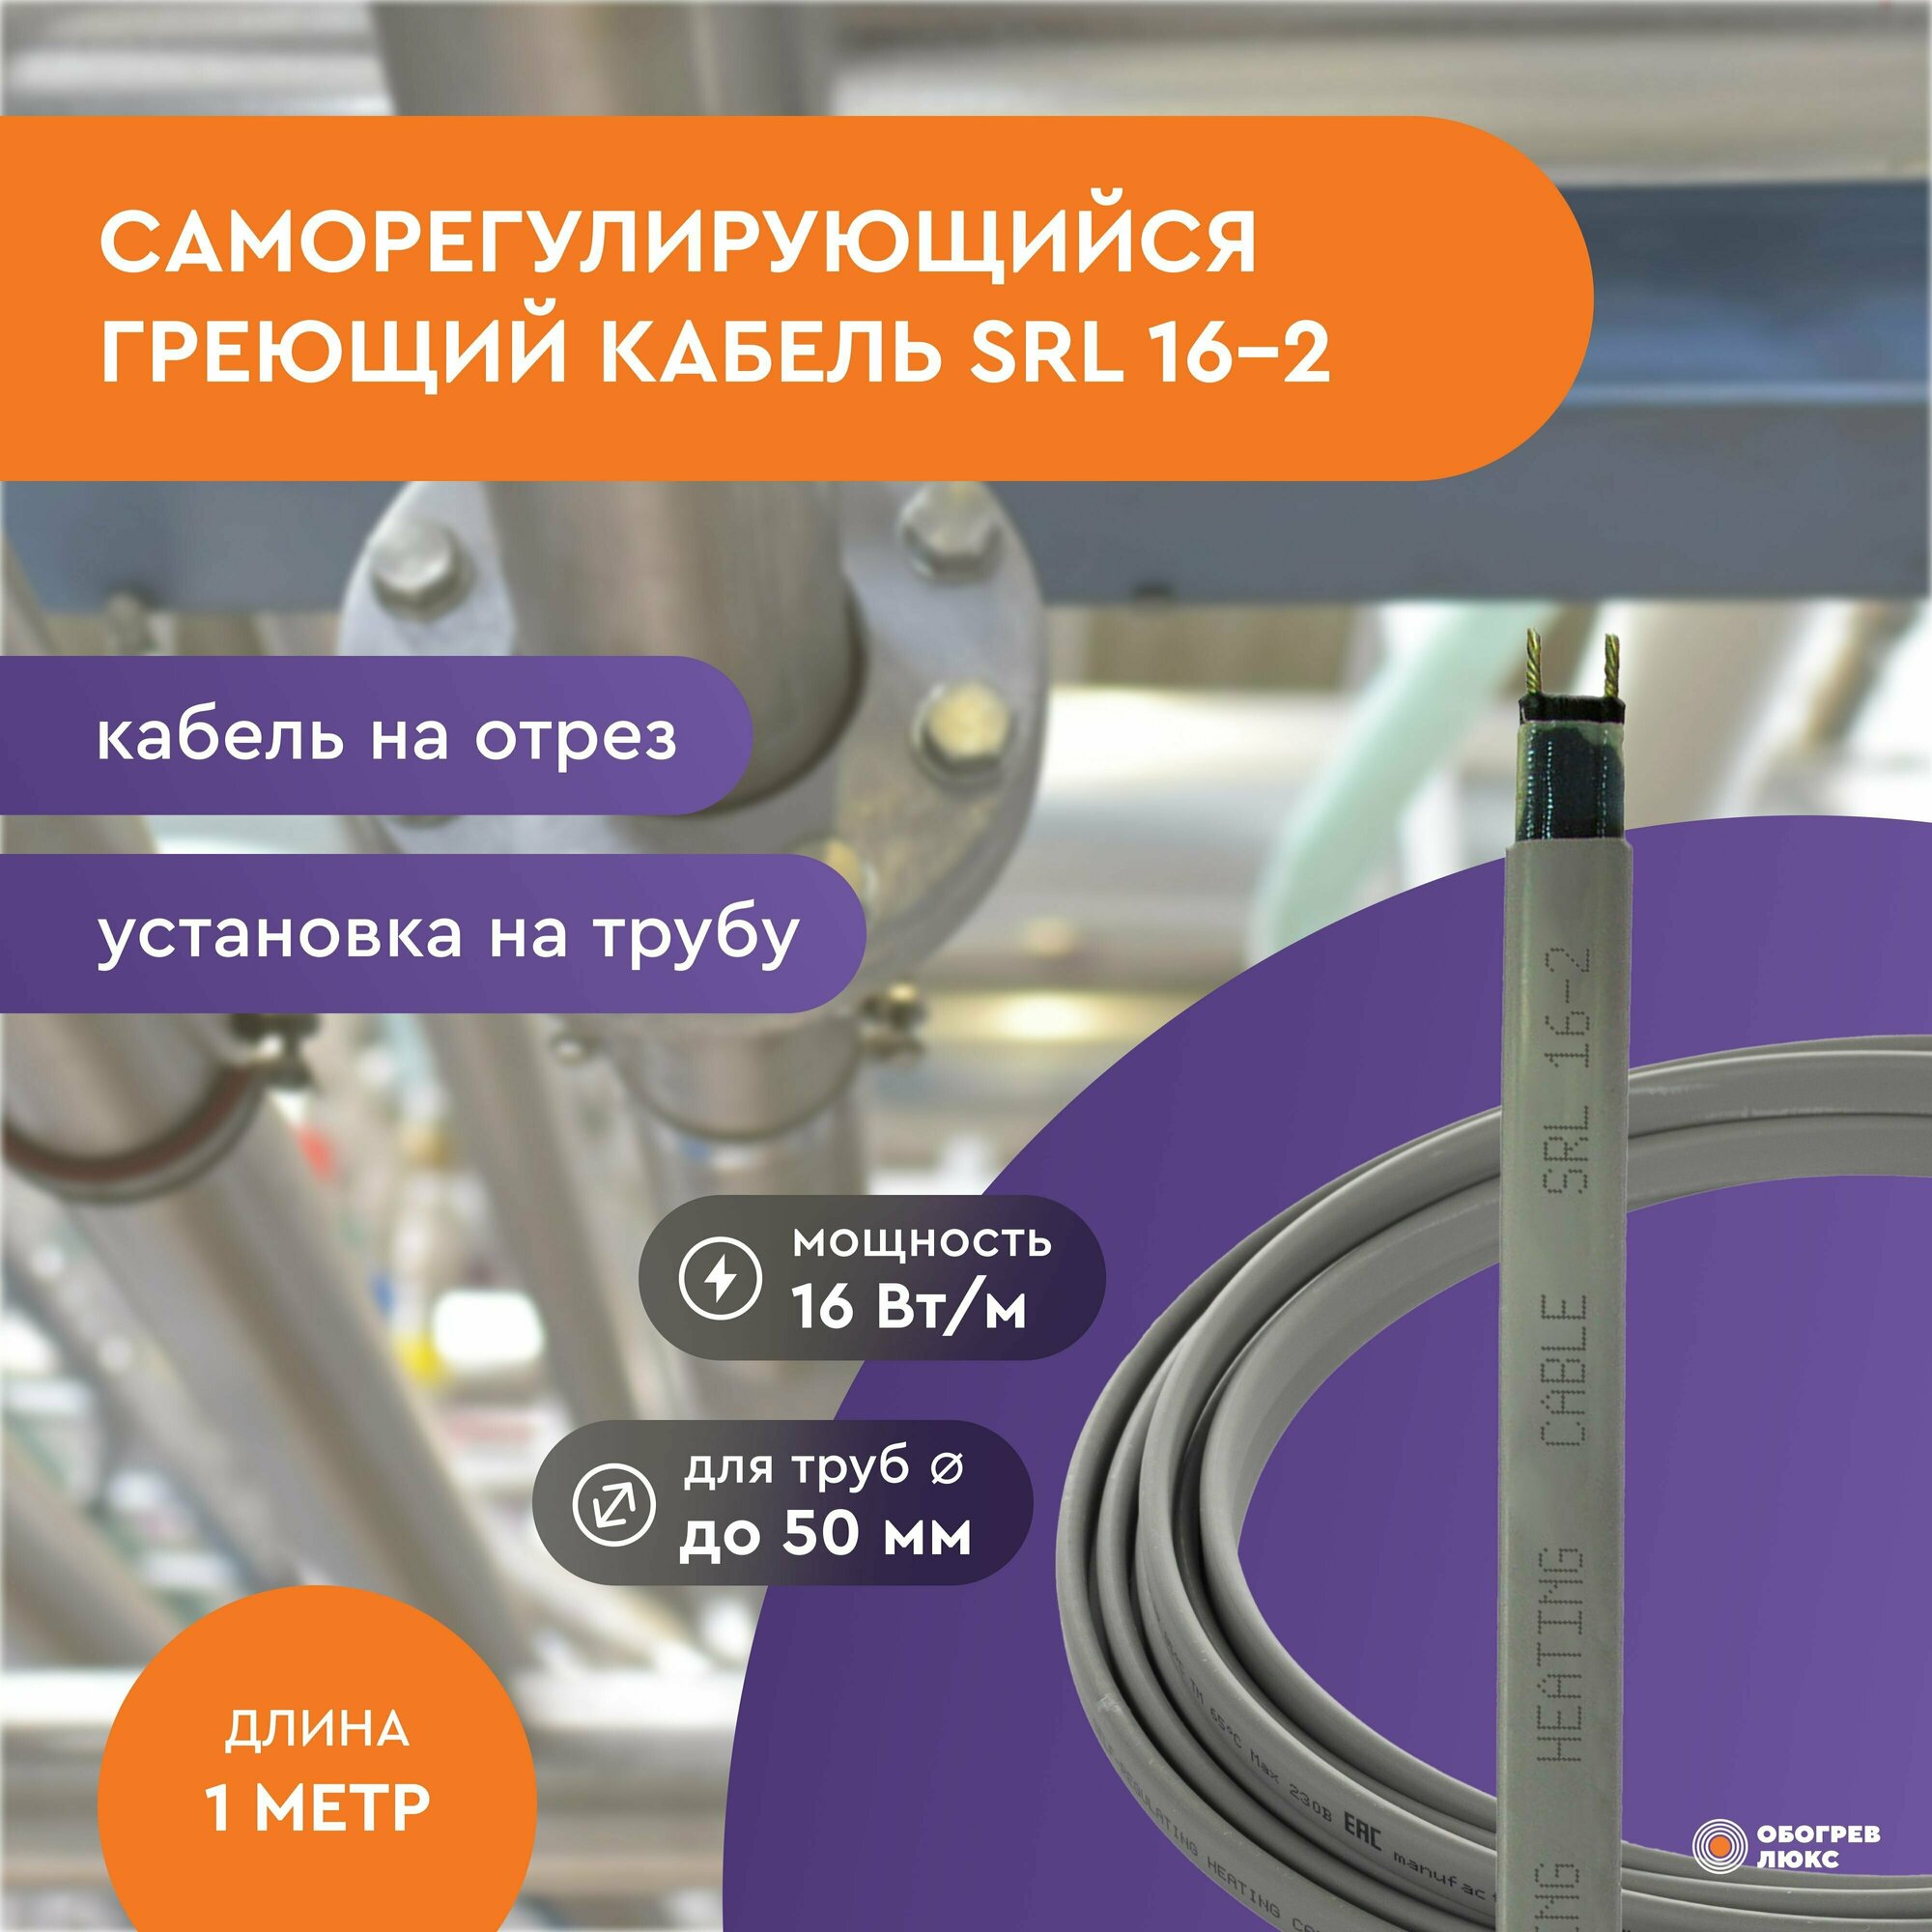 Саморегулирующийся греющий кабель SRL 16-2 не экран. 16 Вт для водопровода (на трубу), на отрез 1м